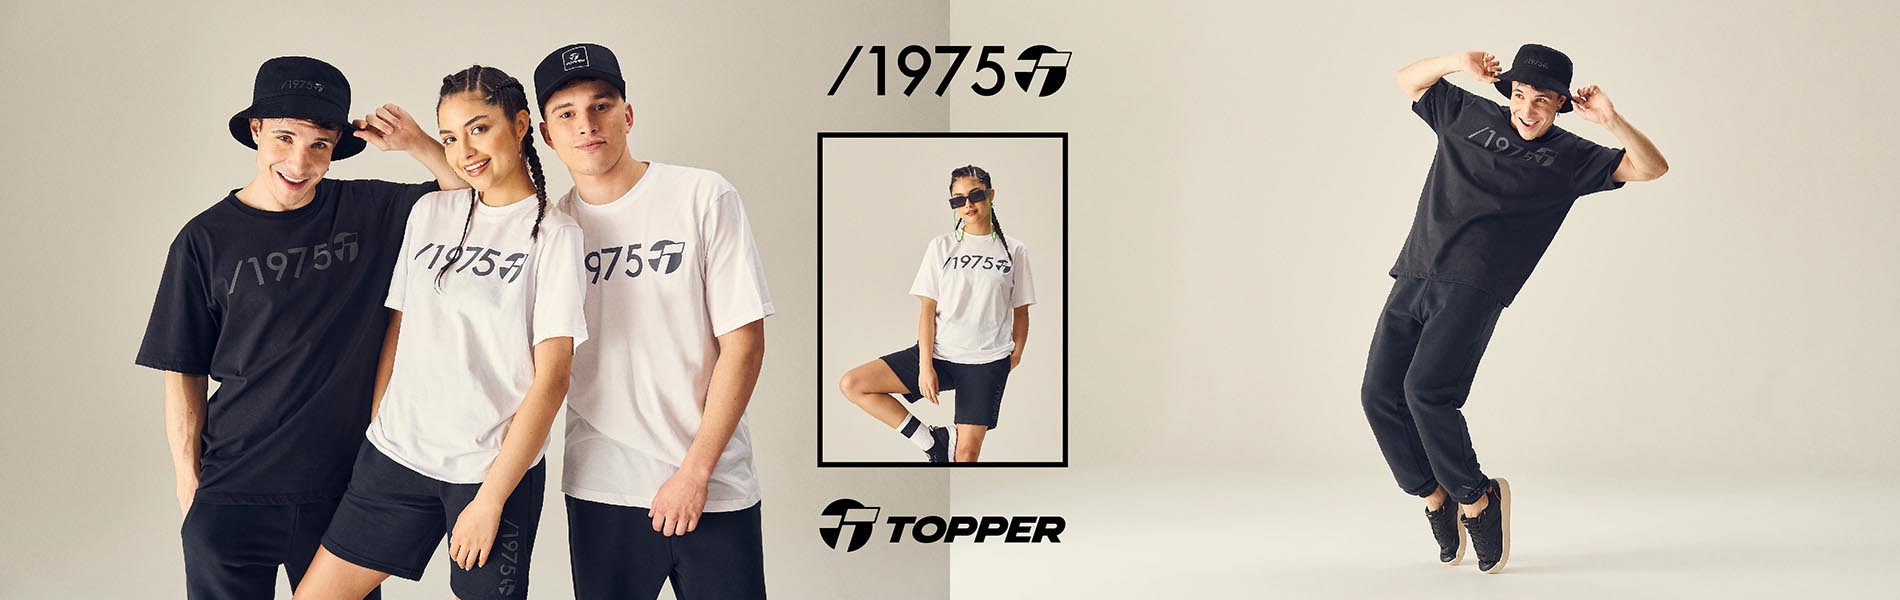 TOPPER S78 1975